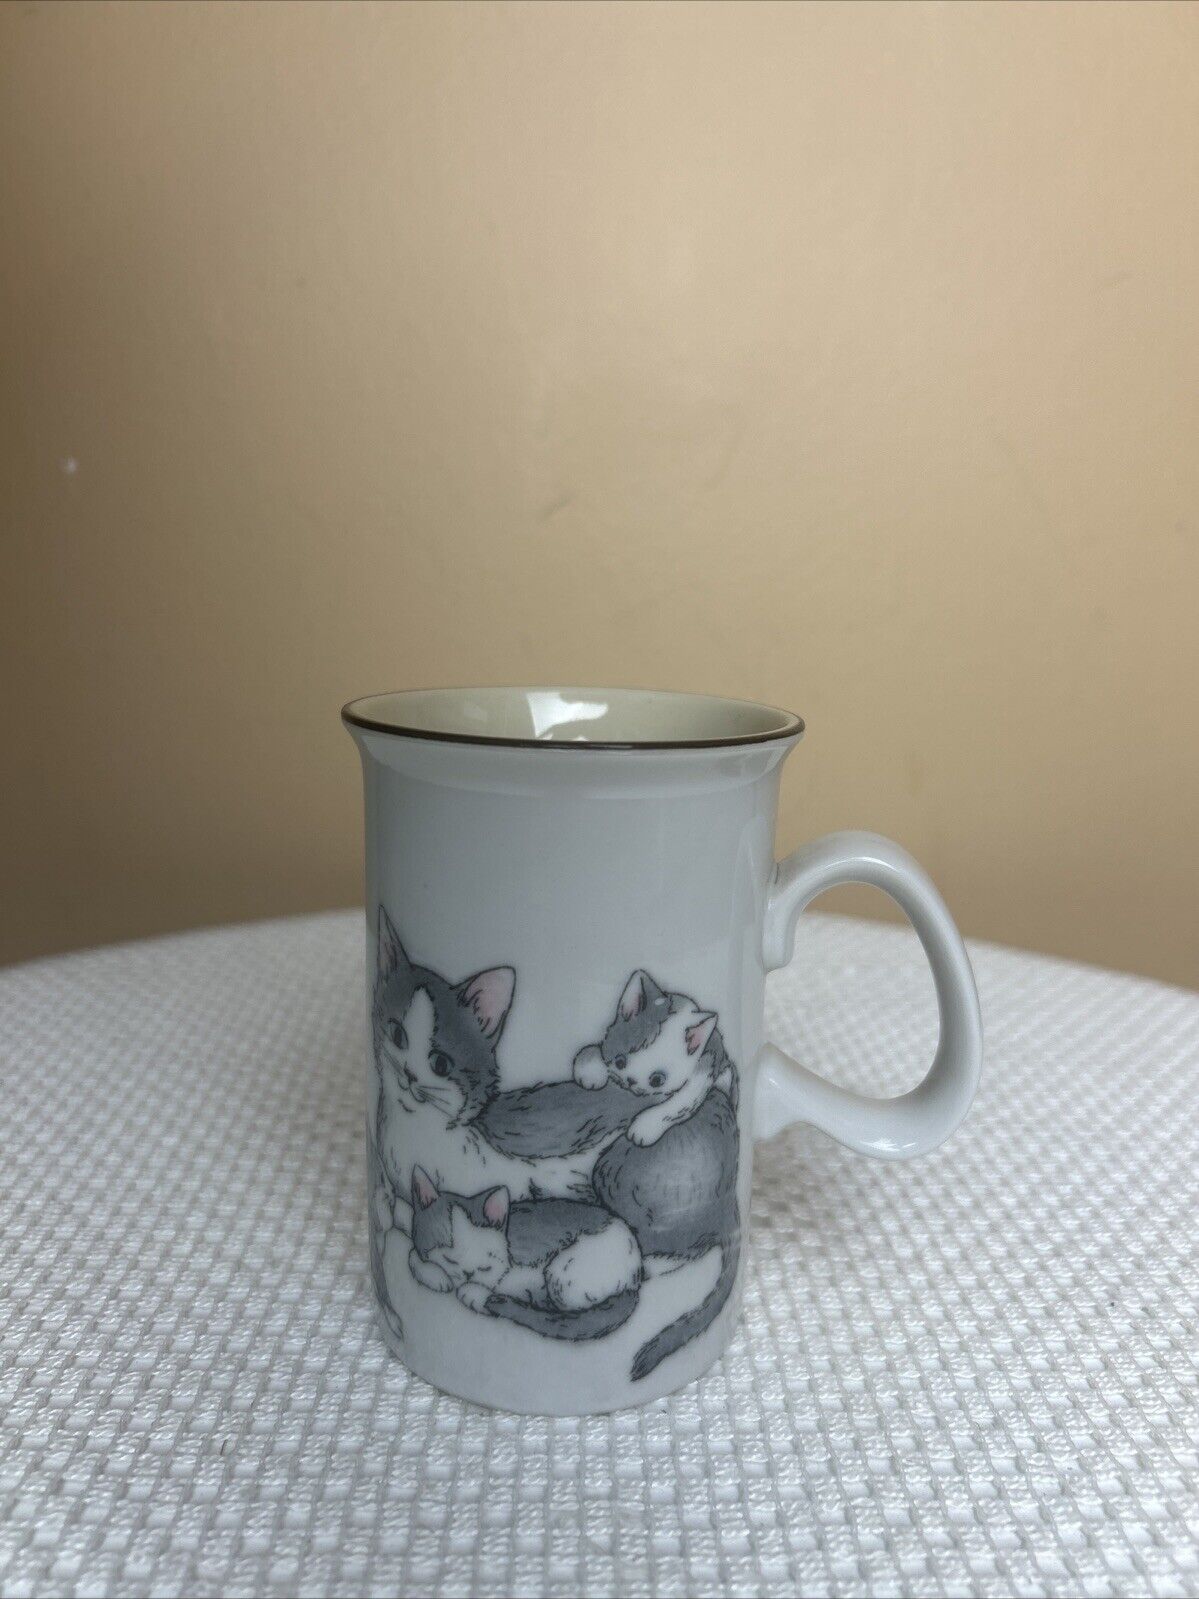 Vintage Cat & Kitten Mug - Coffee, Tea - Gray & White - Unique Cute Pet Gift Cup